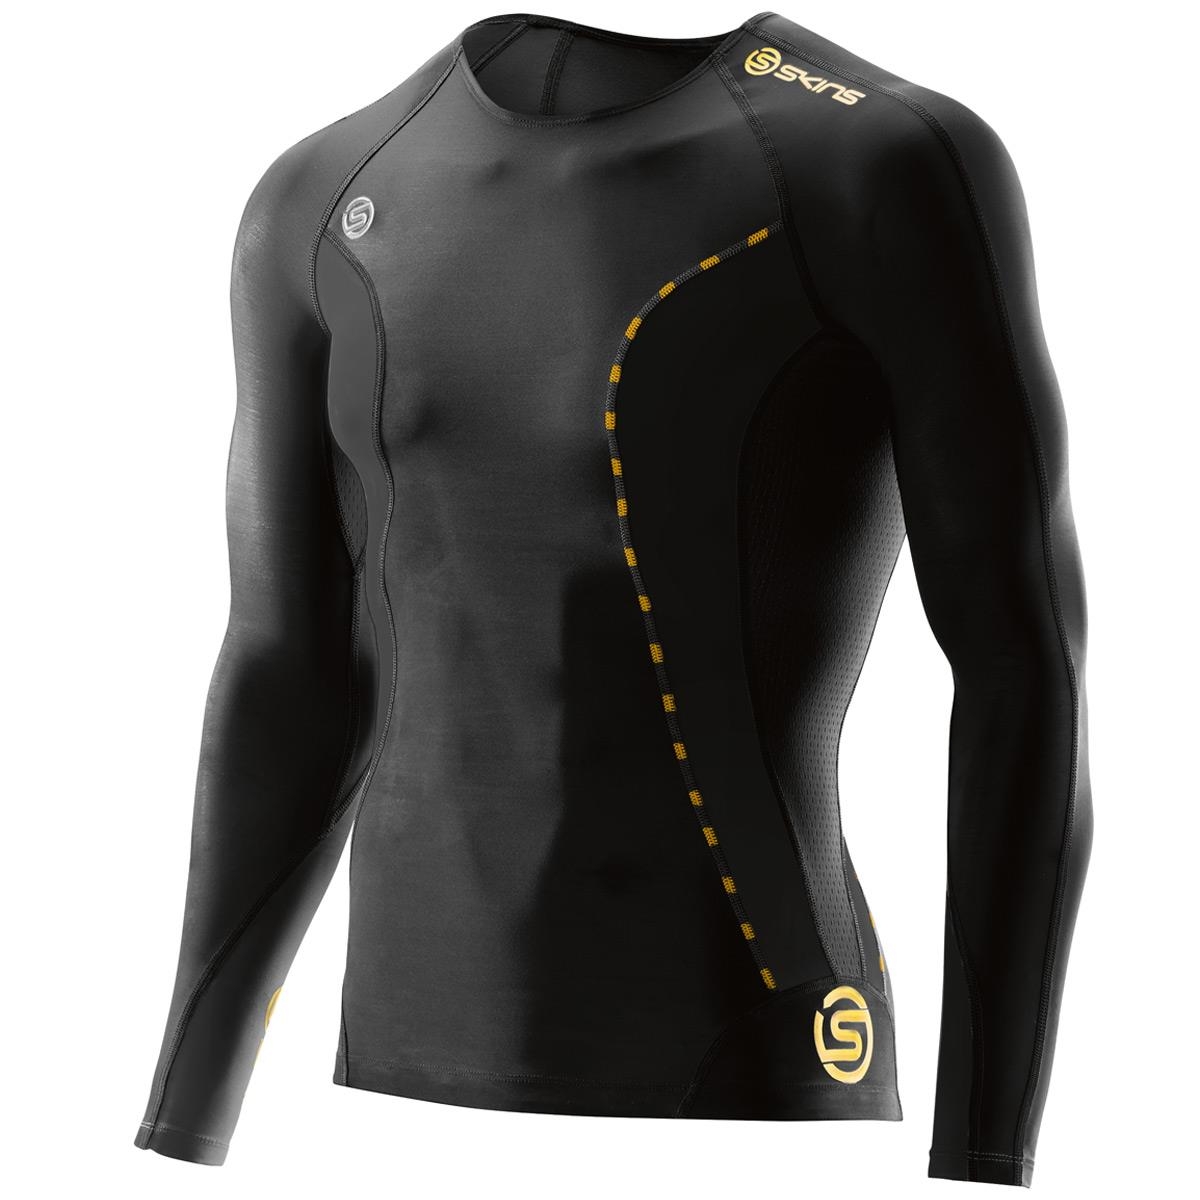 Details about   Skins DNAmic Dynamic Compression Longsleeve Camiseta funcional Shirt negro SALE 